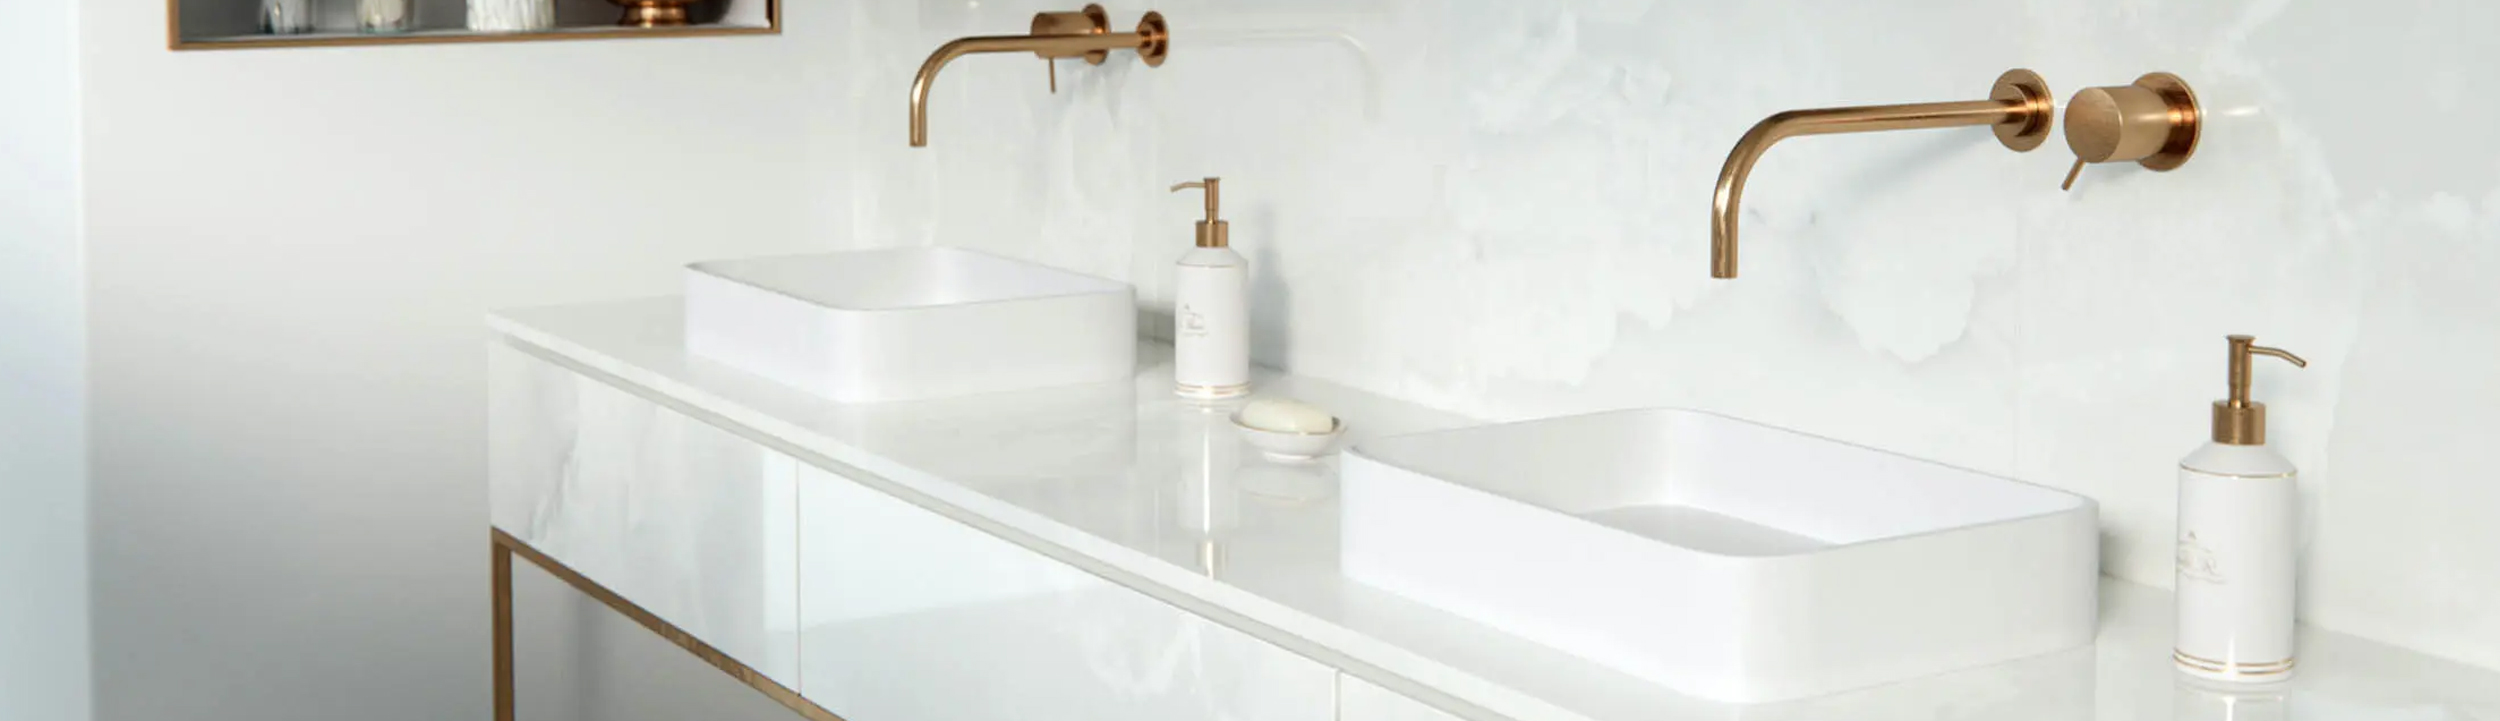 Bathroom stone, granite, marble and quartz solutions - Aviva Stone South East Ltd